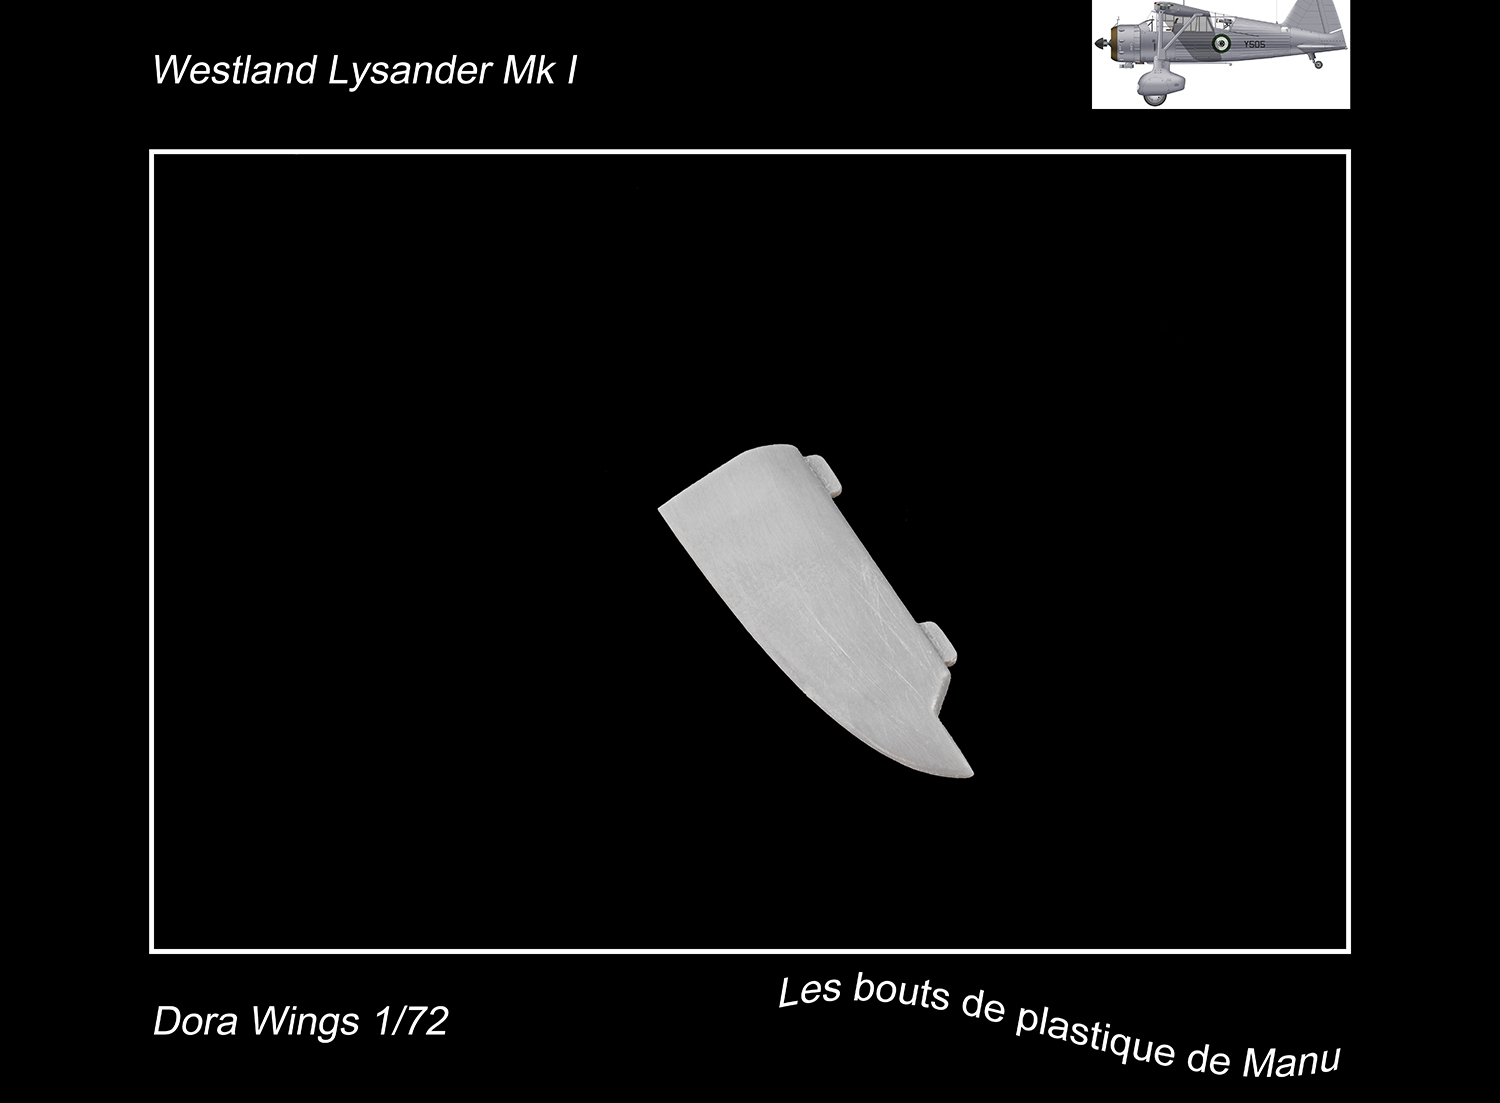 [Dora Wings] Westland Lysander Mk I - Je préfère en rire... L40x